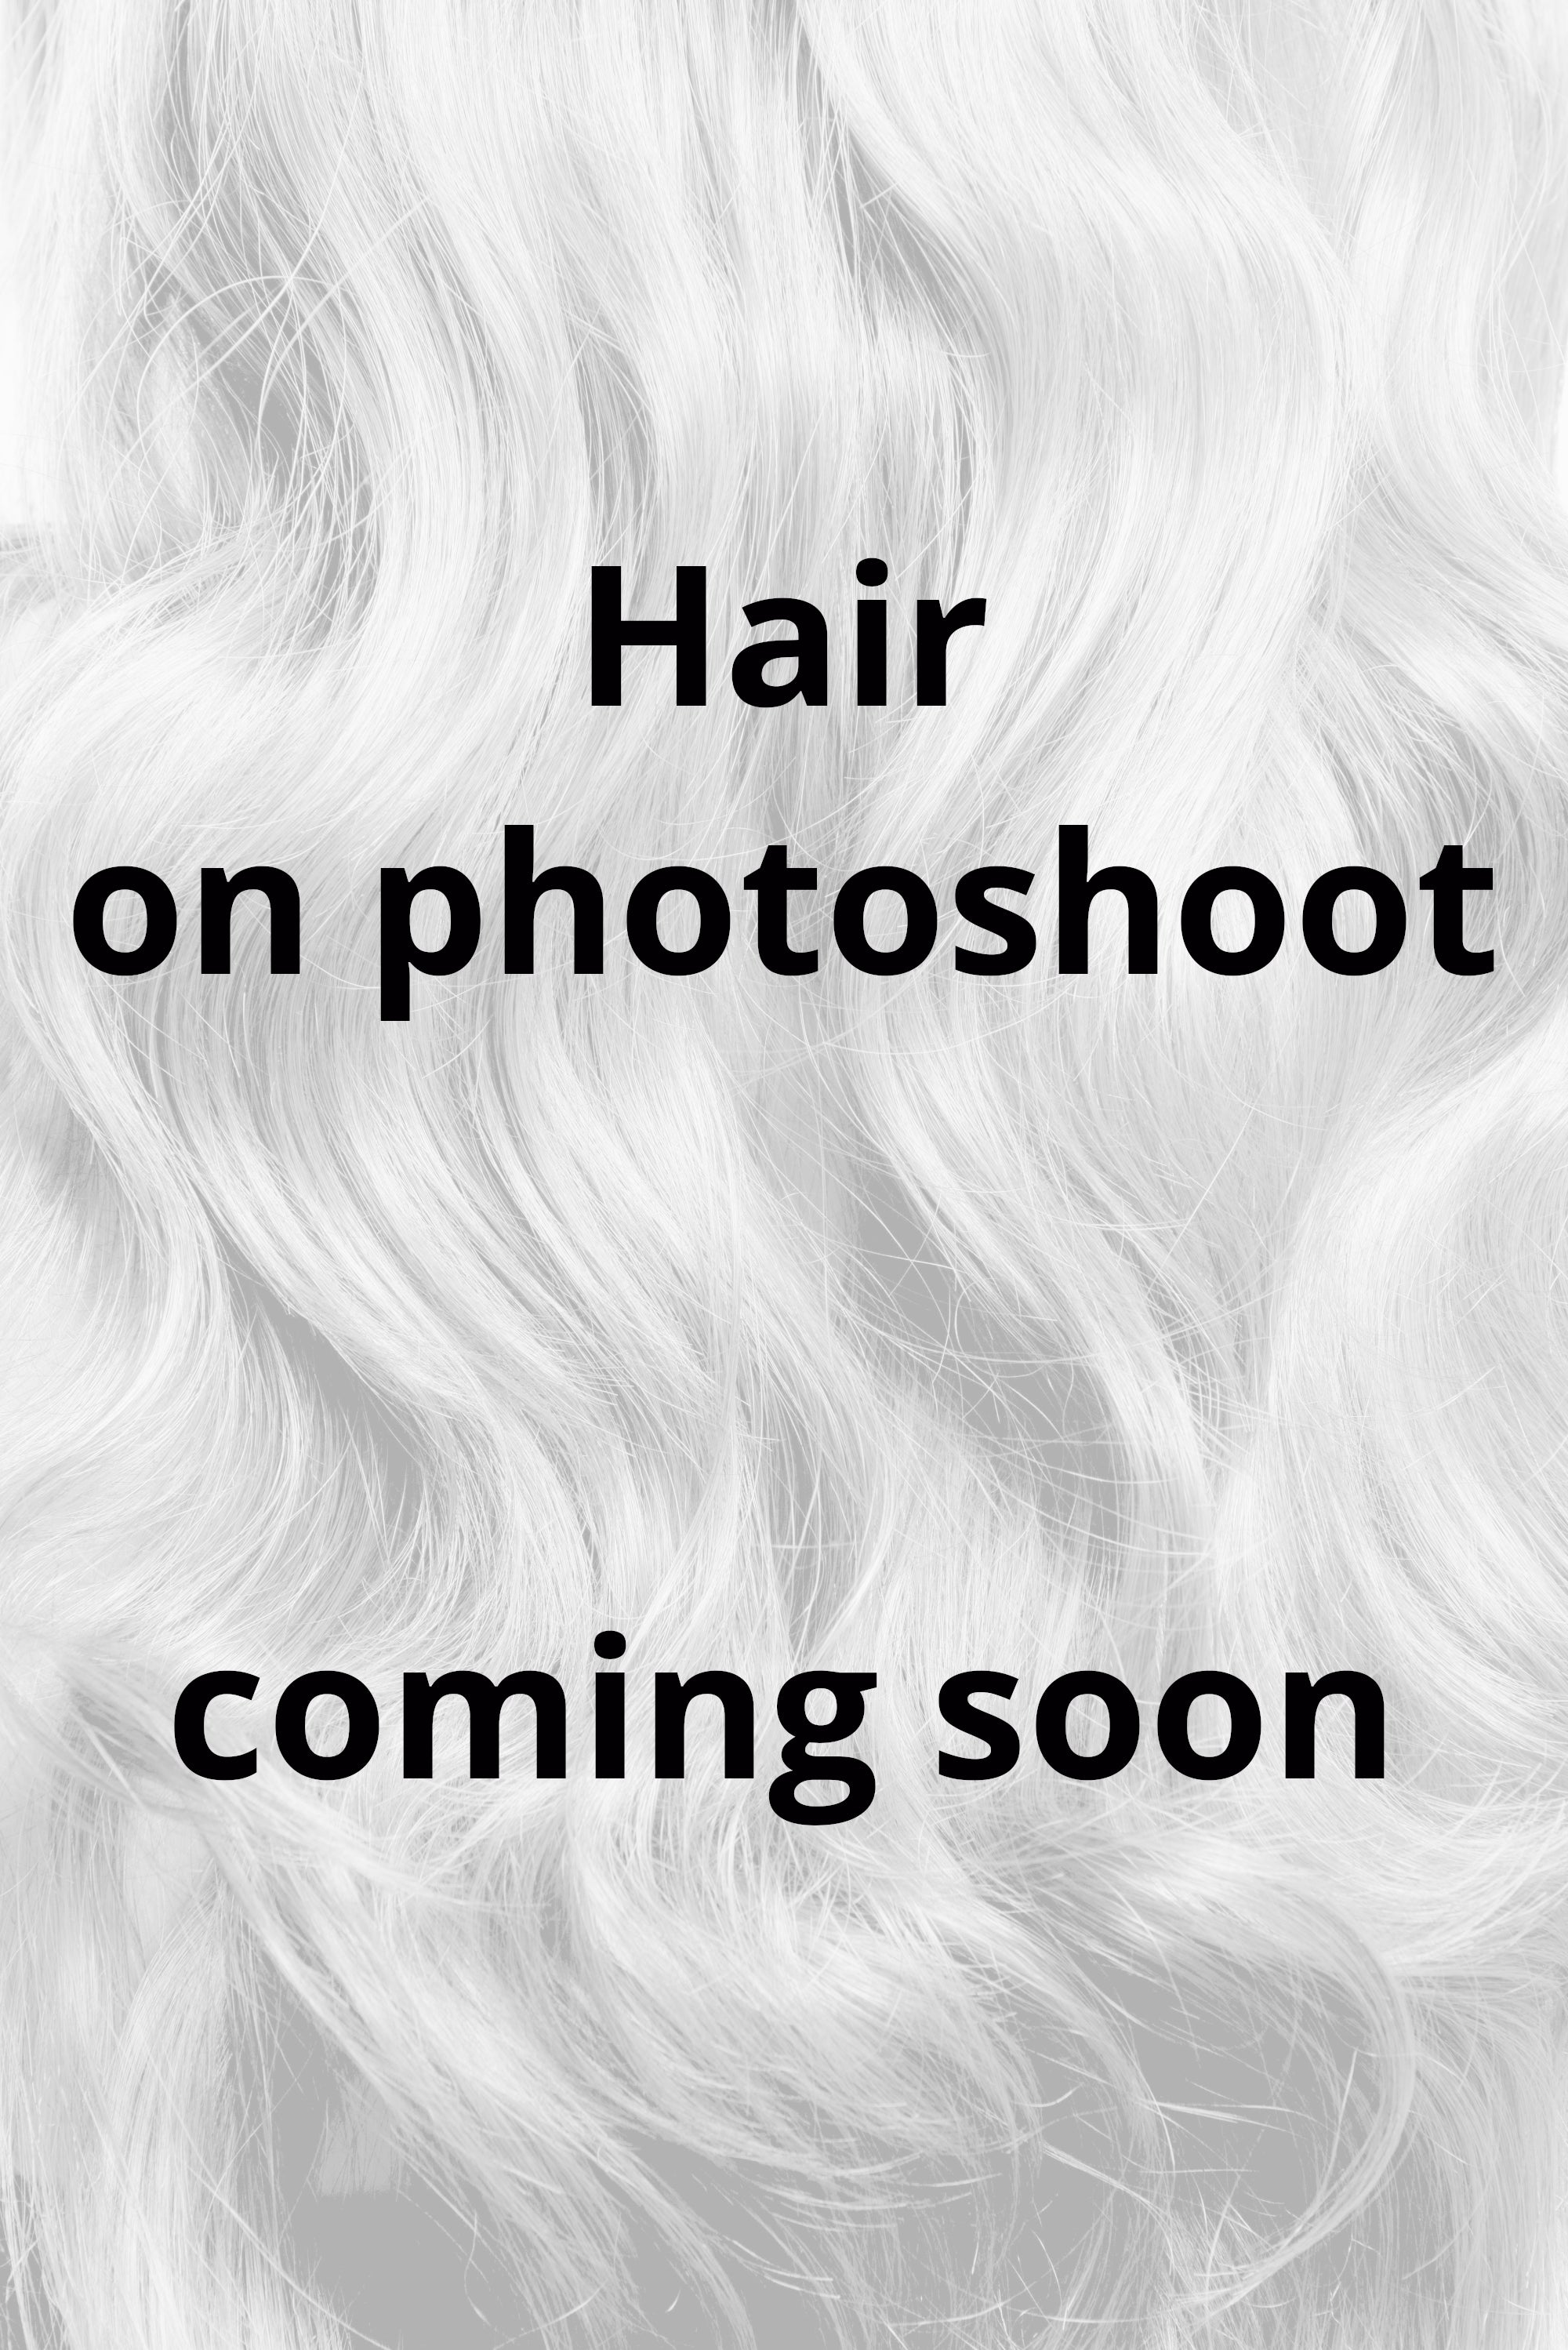 Behair professional Bulk hair "Premium" 24" (60cm) Natural Wave Light Gold Sand #16 - 25g hair extensions